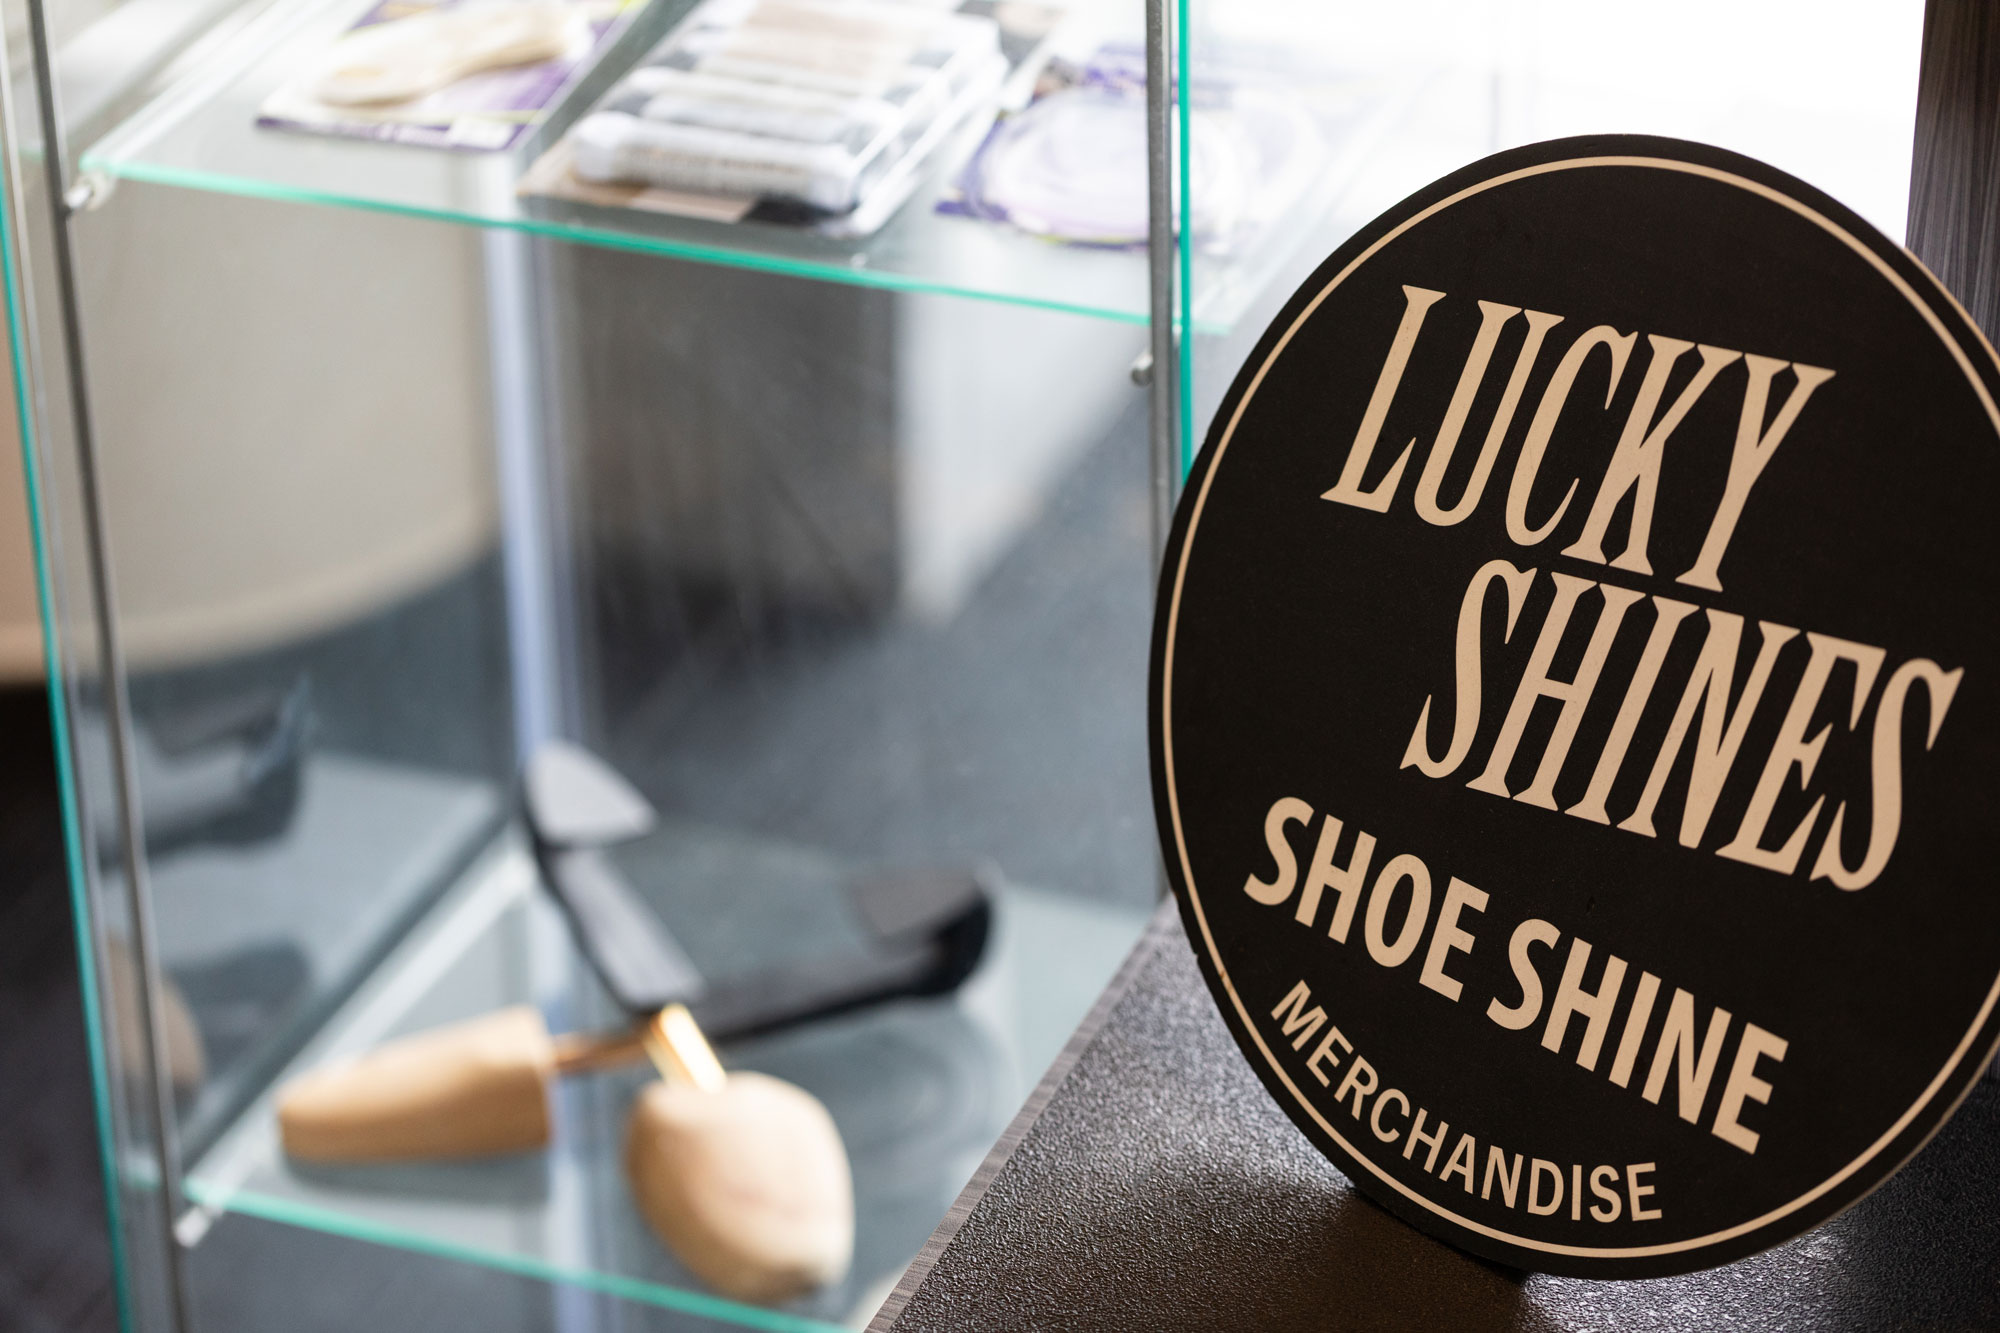 Lucky Shines Shoe Shine Merchandise Detail